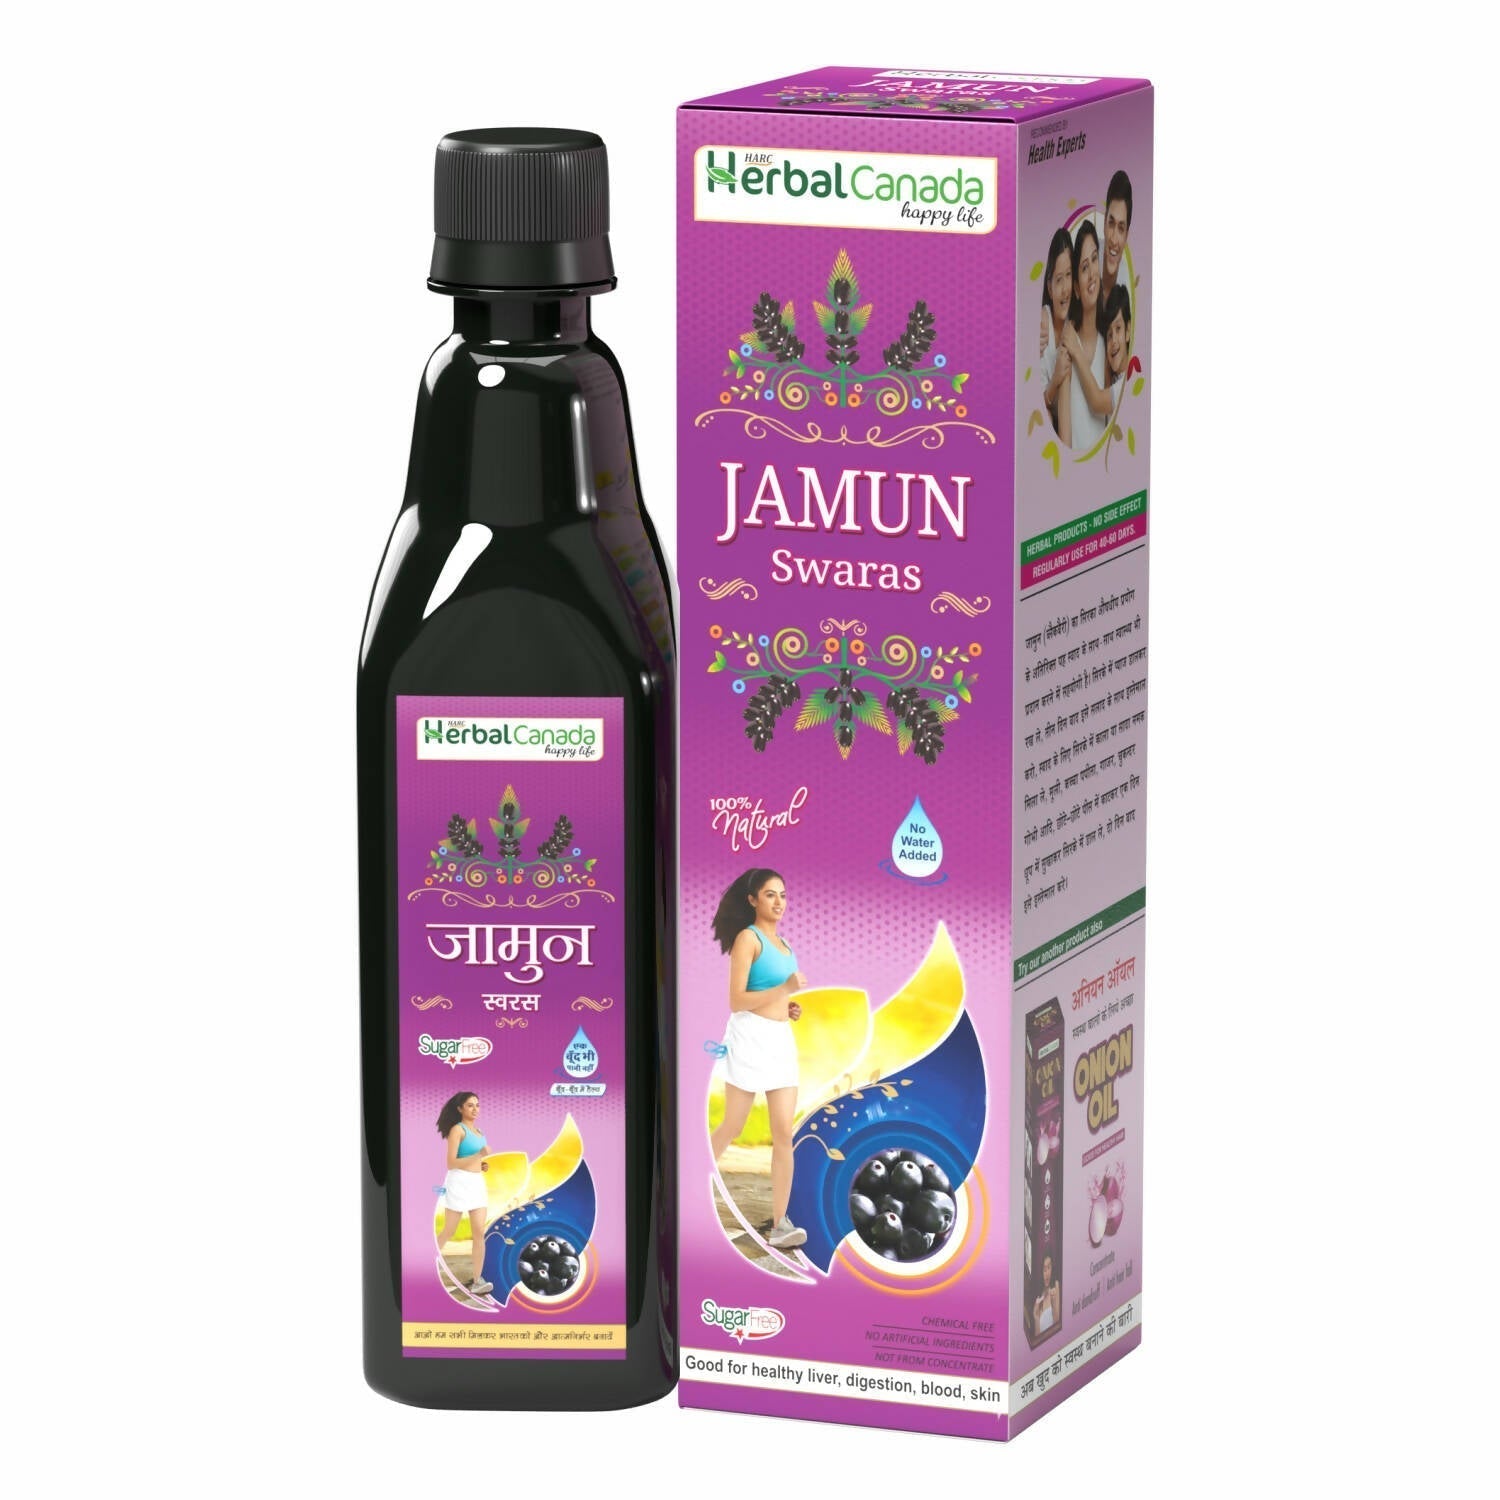 Herbal Canada Jamun Swaras - usa canada australia